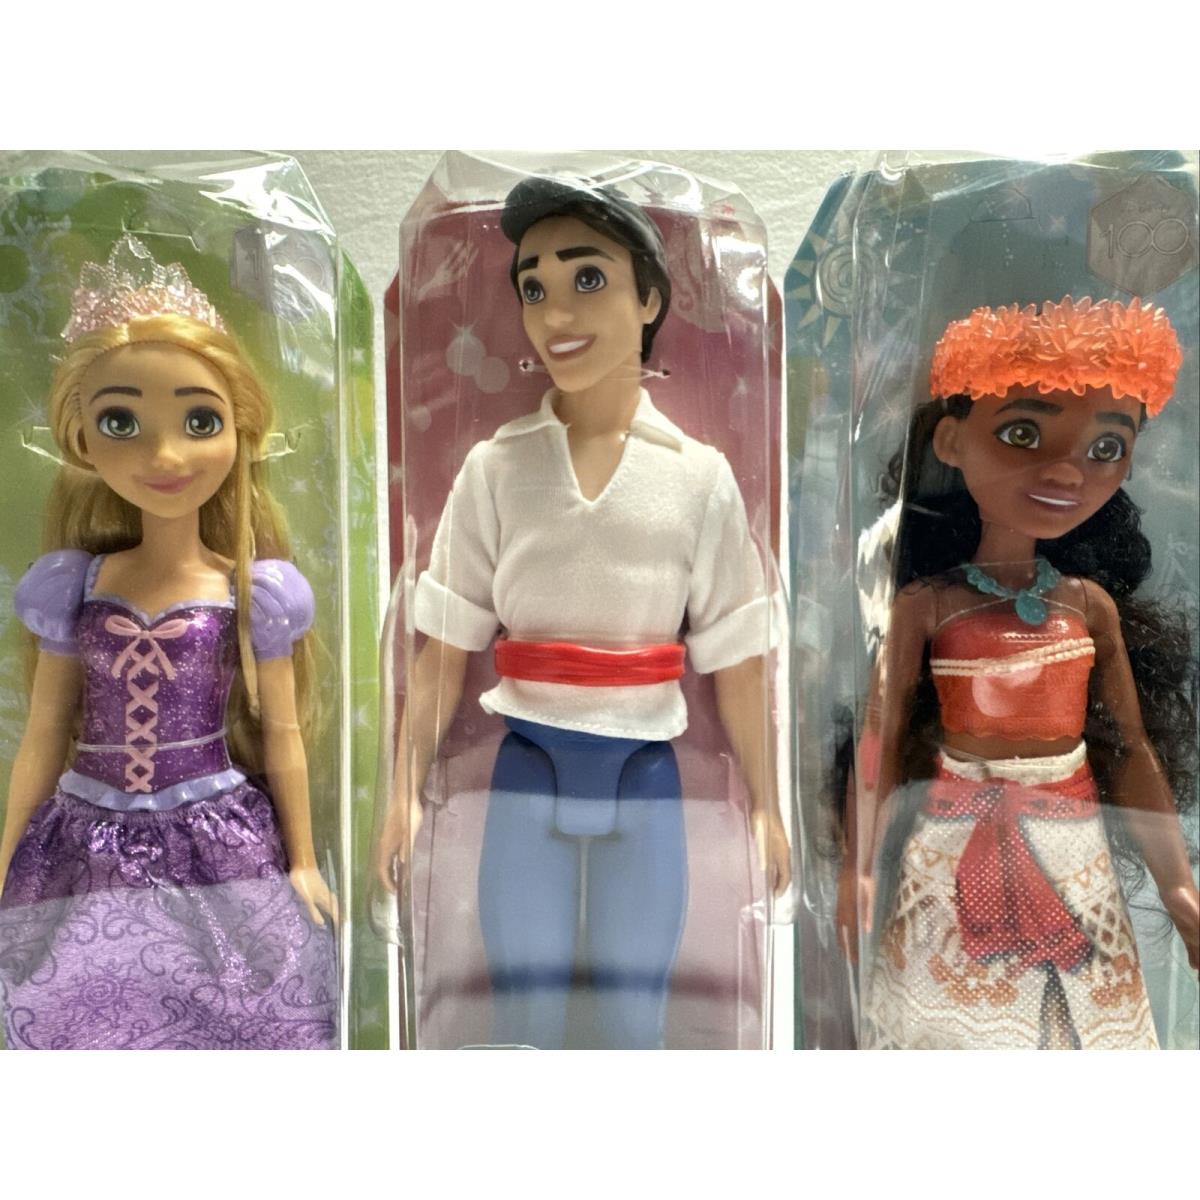 Includes Disney Princess Moana Poseable Fashion Doll 11 Inch Distress Box